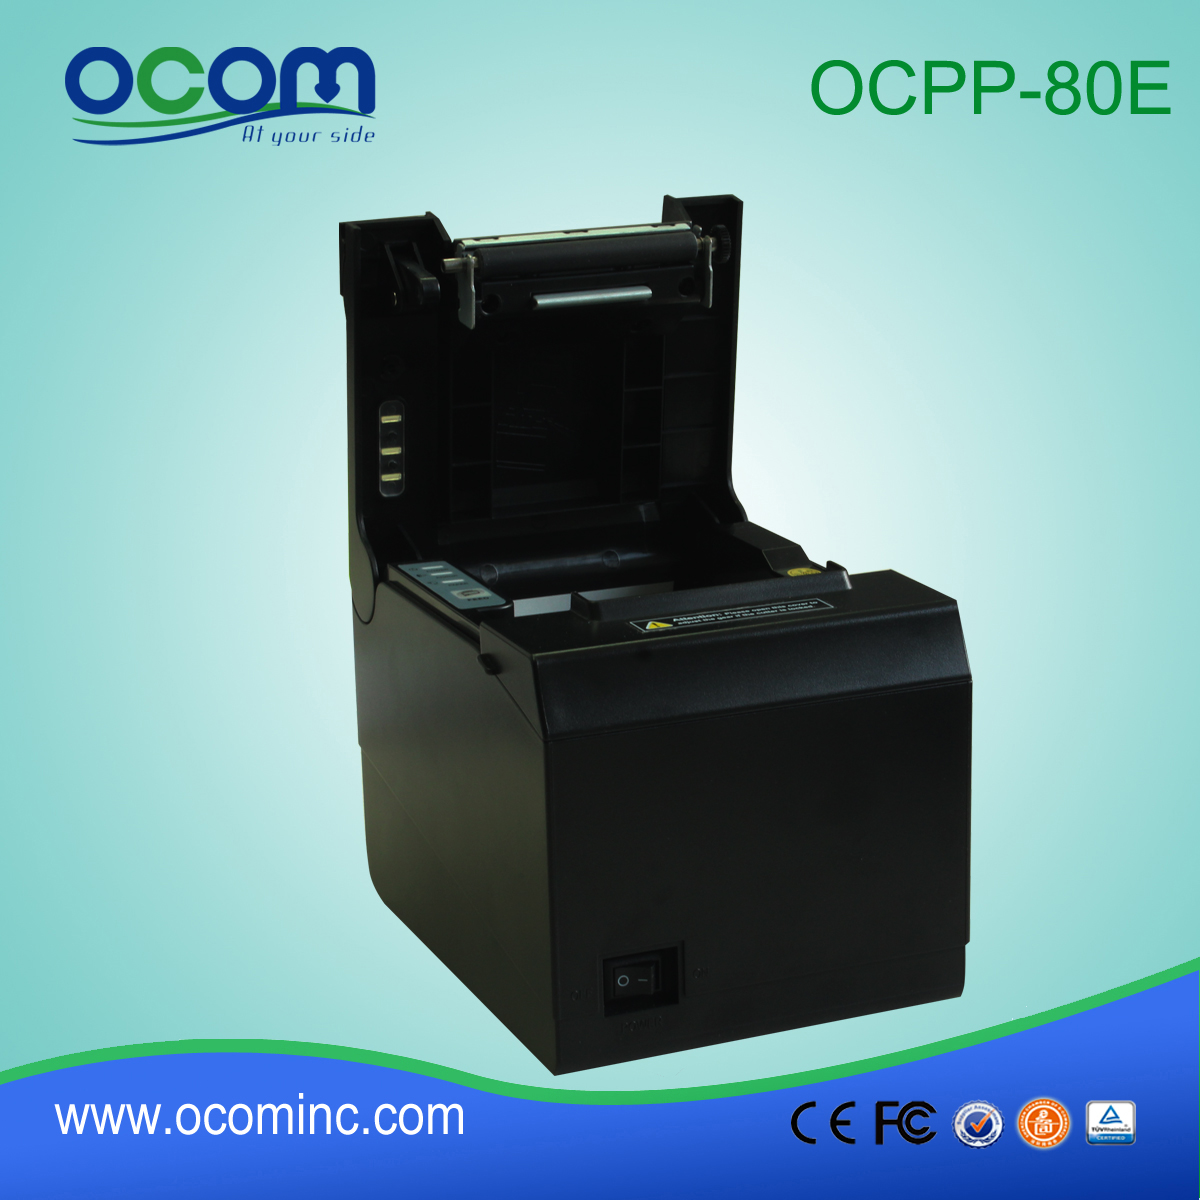 Shenzhen λογαριασμό του ξενοδοχείου εκτυπωτή παραλαβή θερμική POS (OCPP-80E)